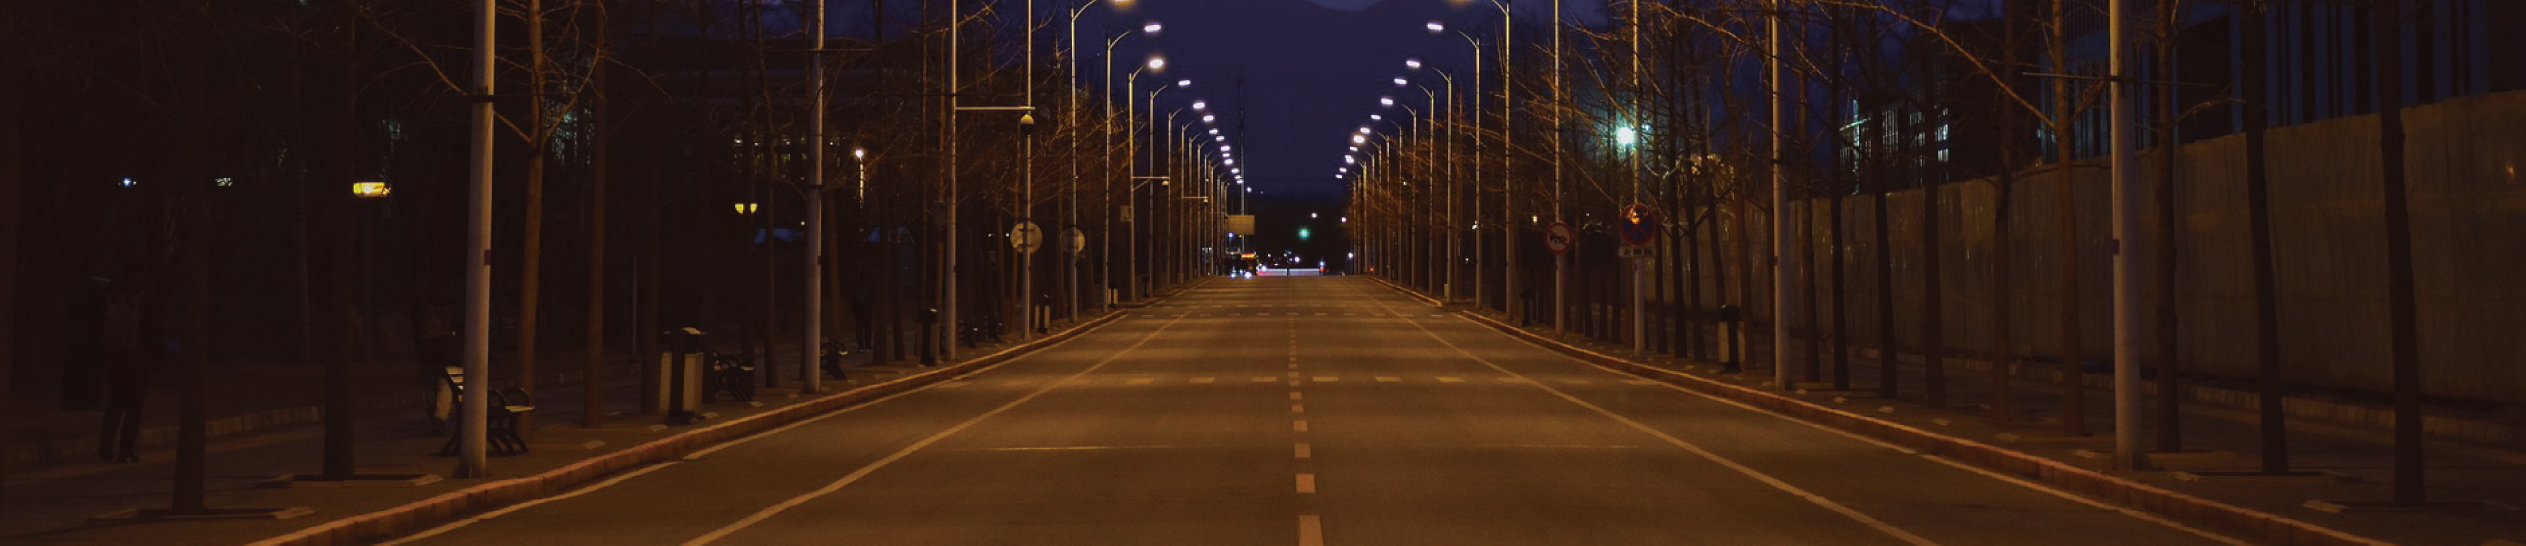 traditional street lights